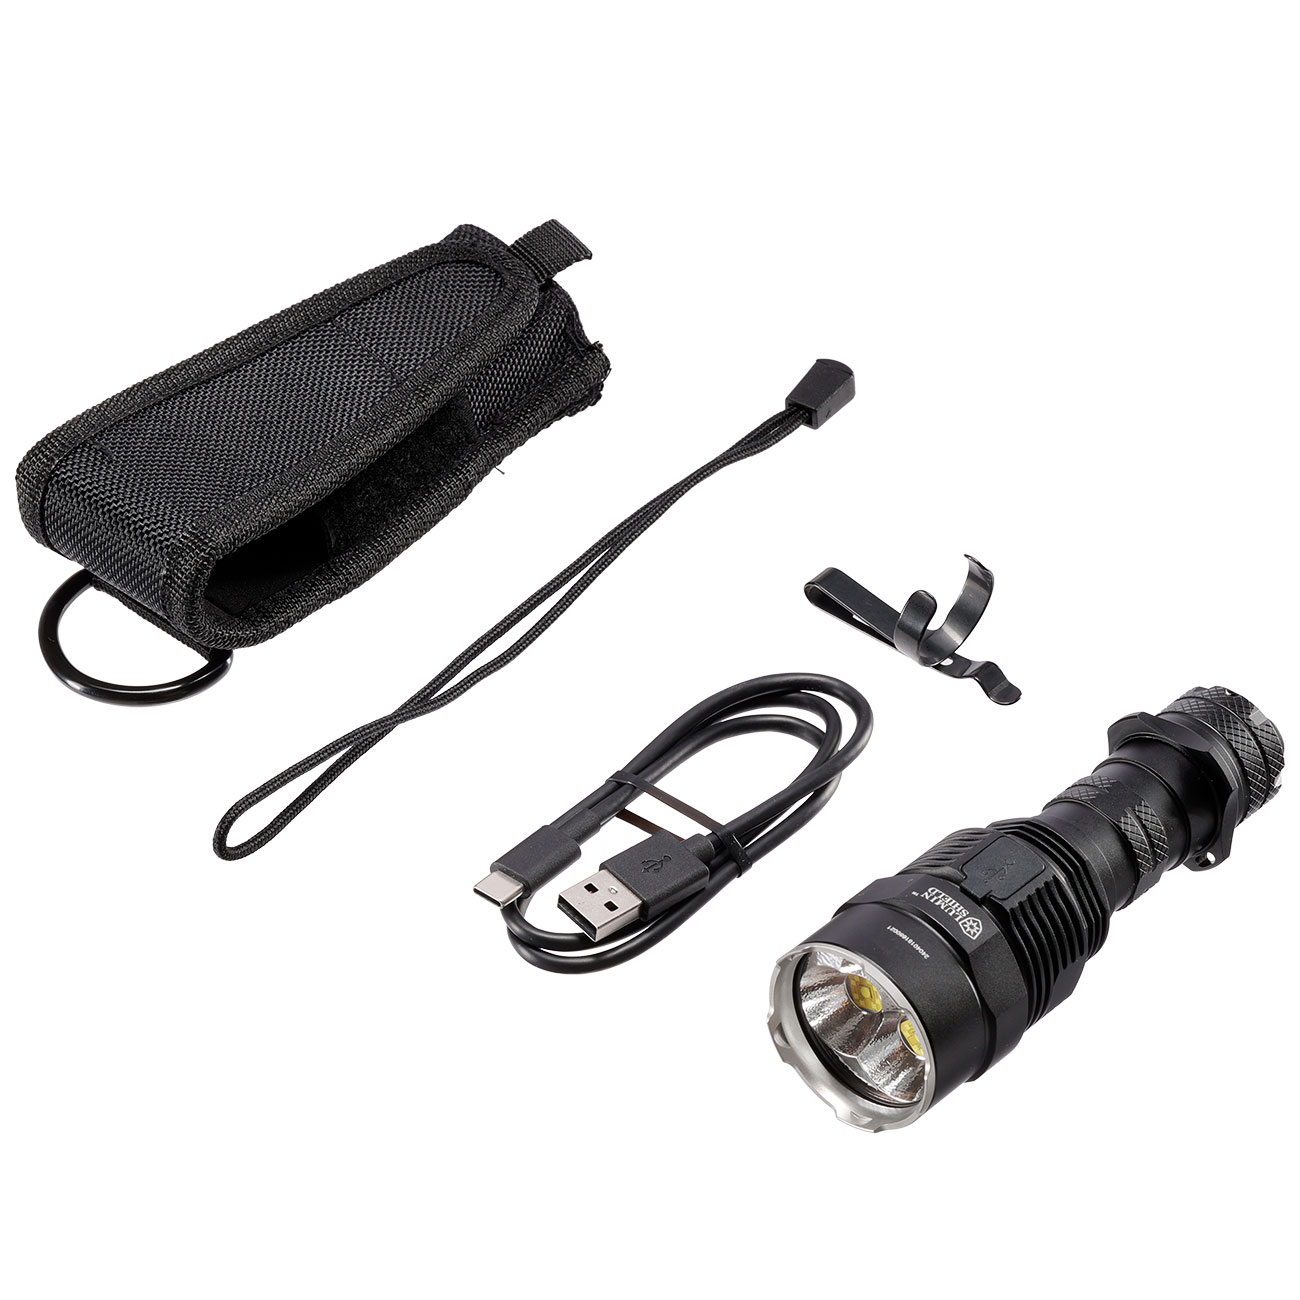 Nitecore LED Taschenlampe TM9K PRO 9900 Lumen schwarz inkl. Akku, Holster, Ladekabel, Lanyard und Grtelclip Bild 4